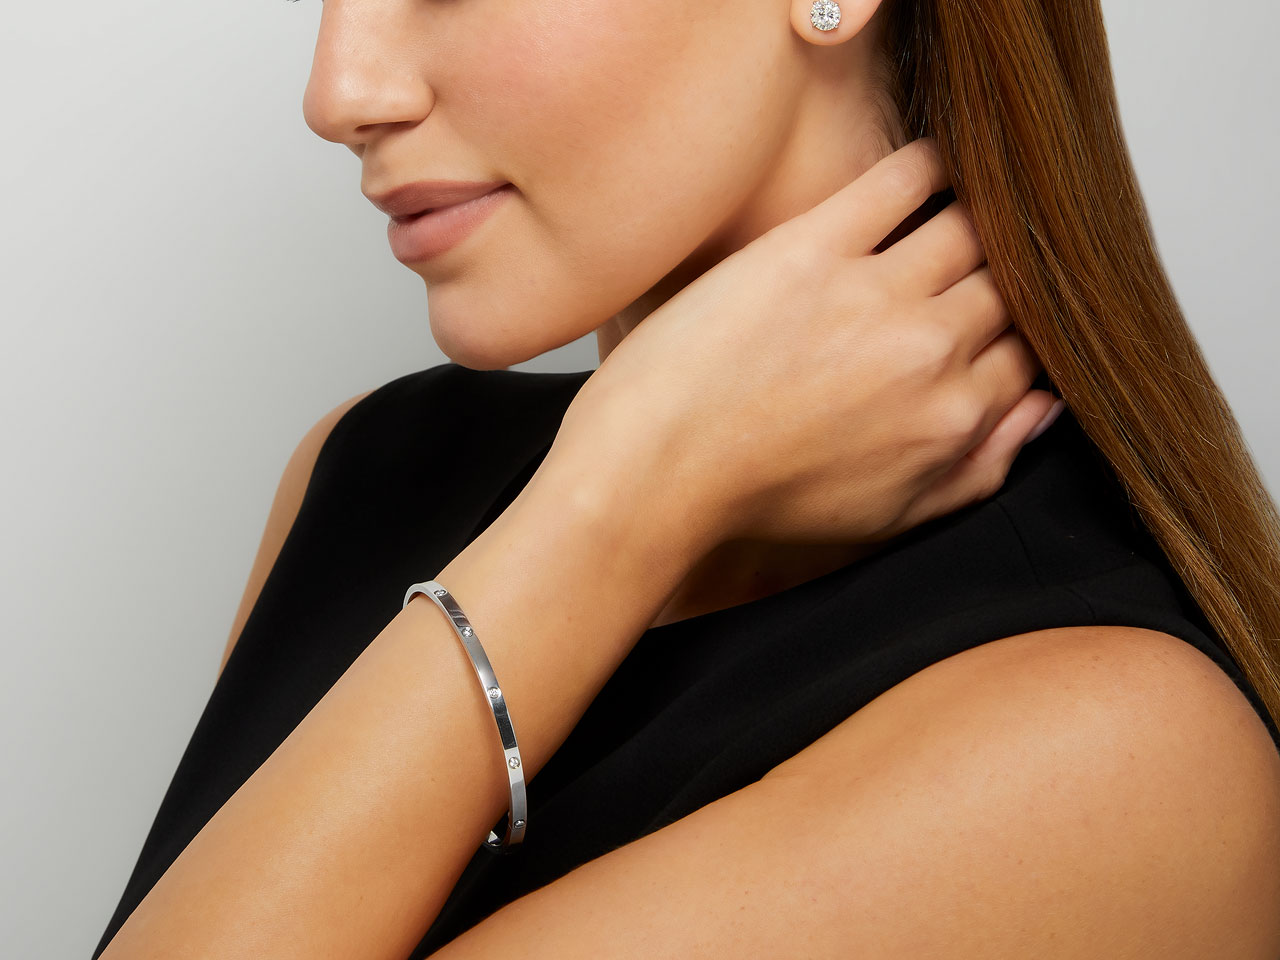 Cartier Diamond 'Love' Bracelet in 18K White Gold, Small Model, 10 Diamonds Size 20